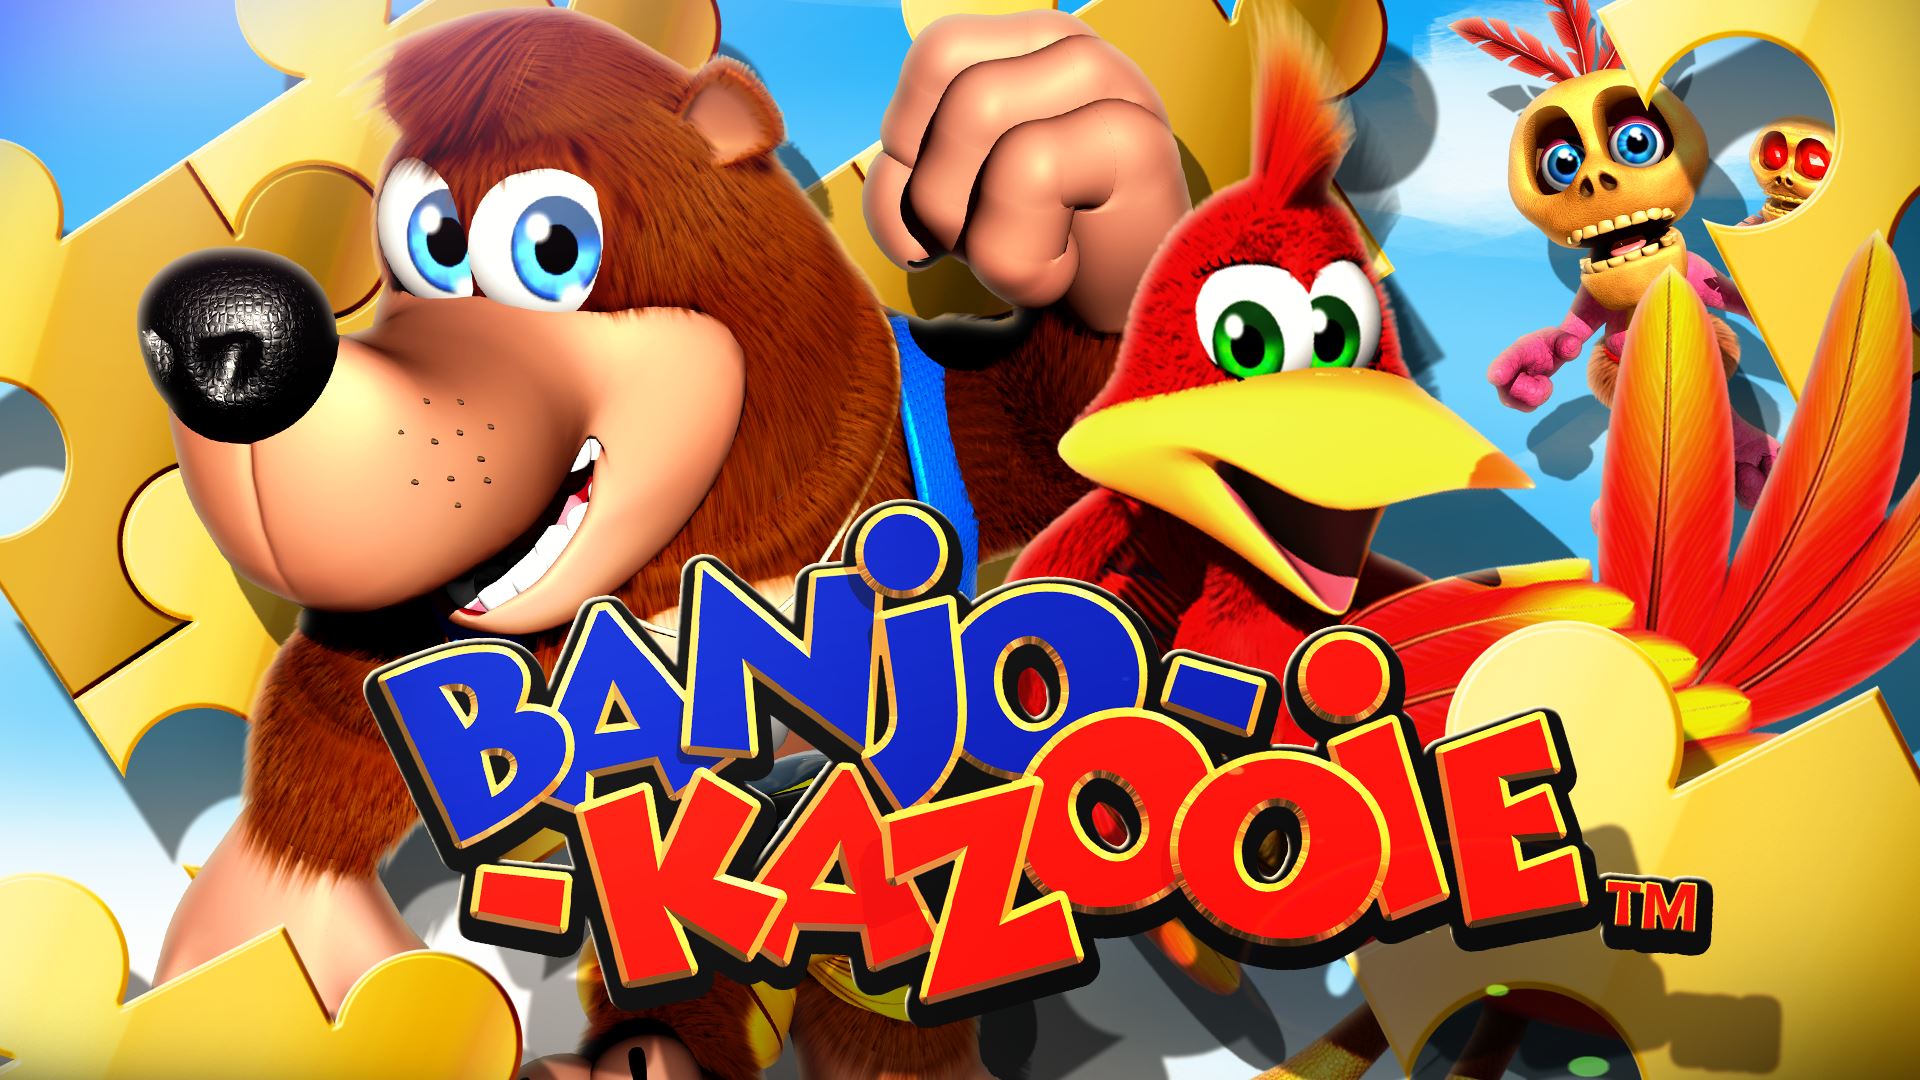 Video Game Banjo-Kazooie HD Wallpaper | Background Image